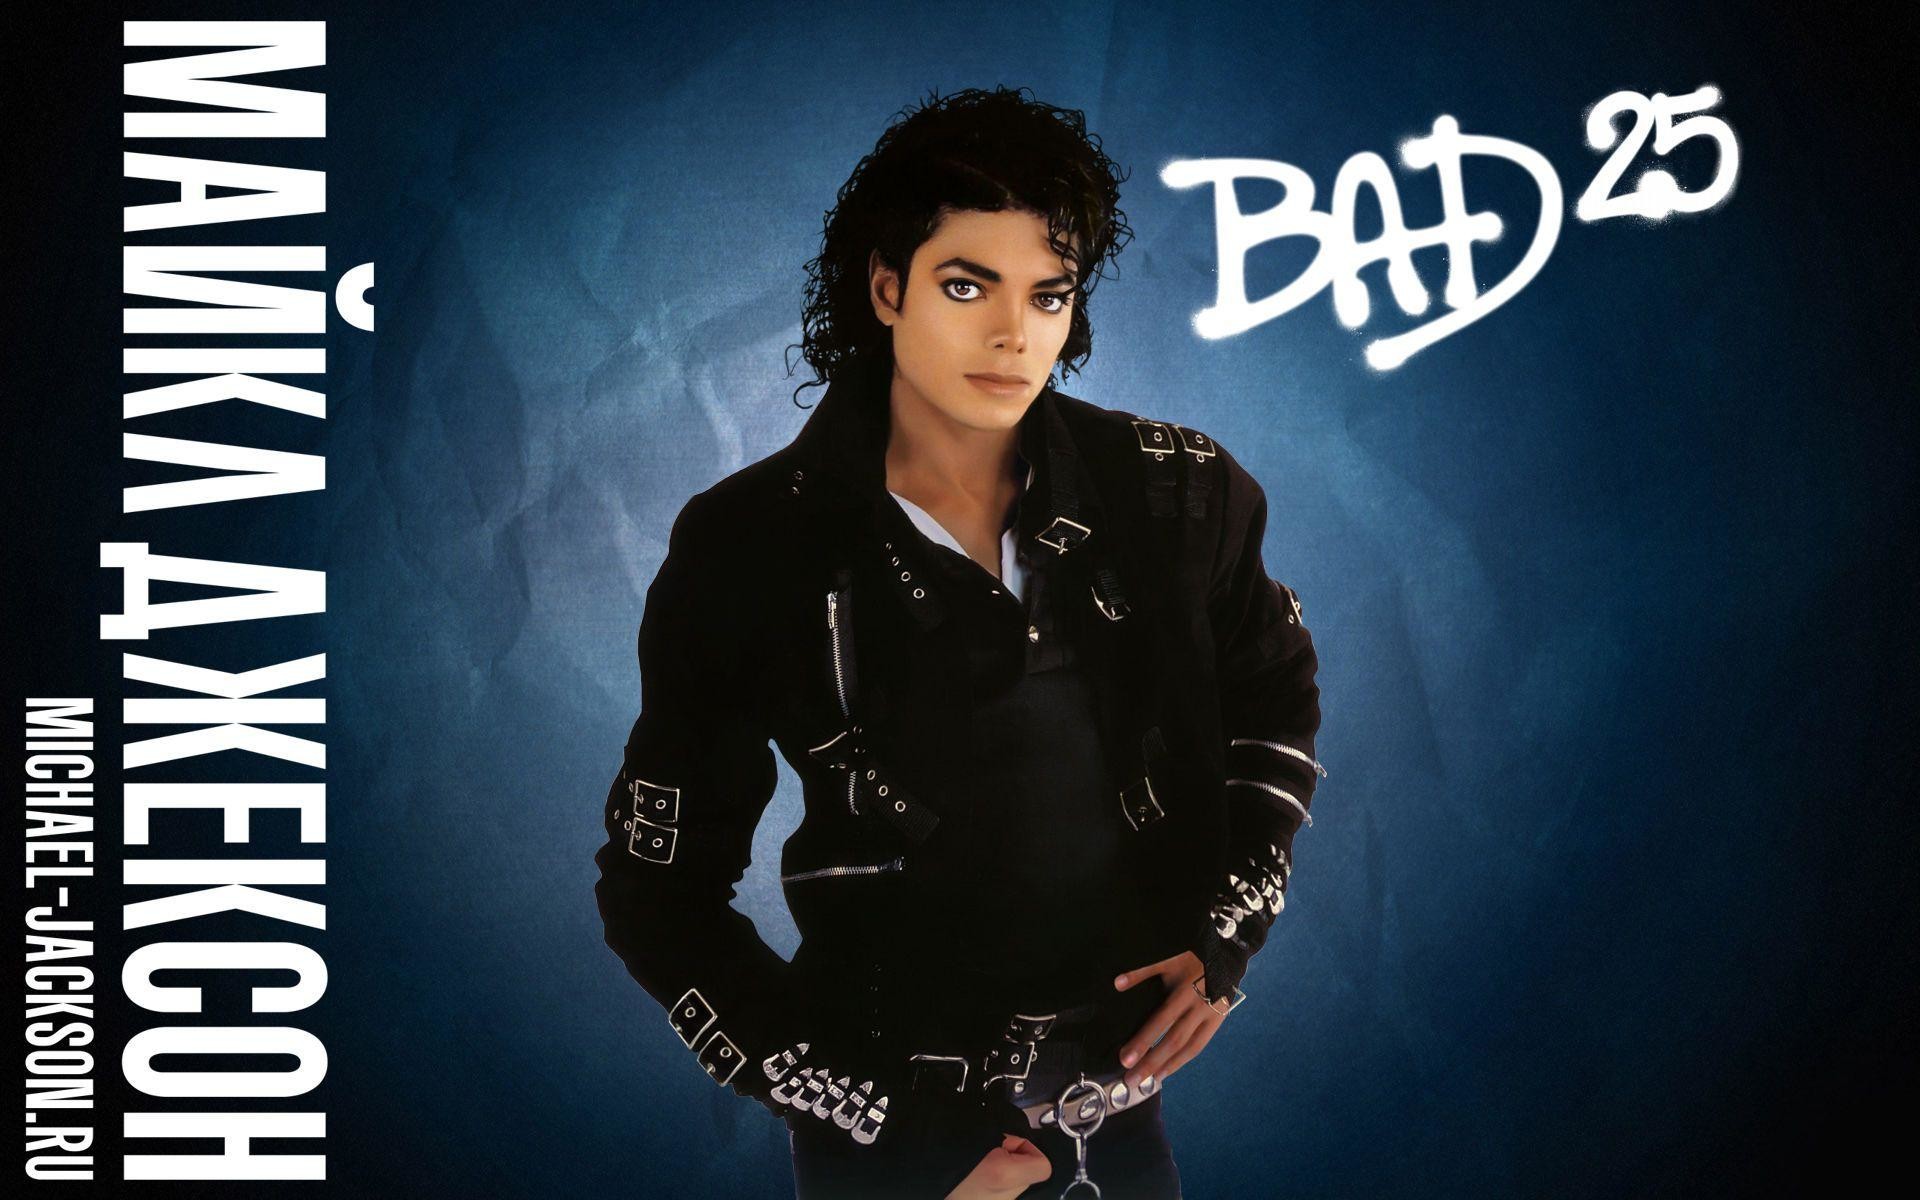 Michael Jackson Bad Wallpaper Hd For Desktop 1920x1200px 1920x1200